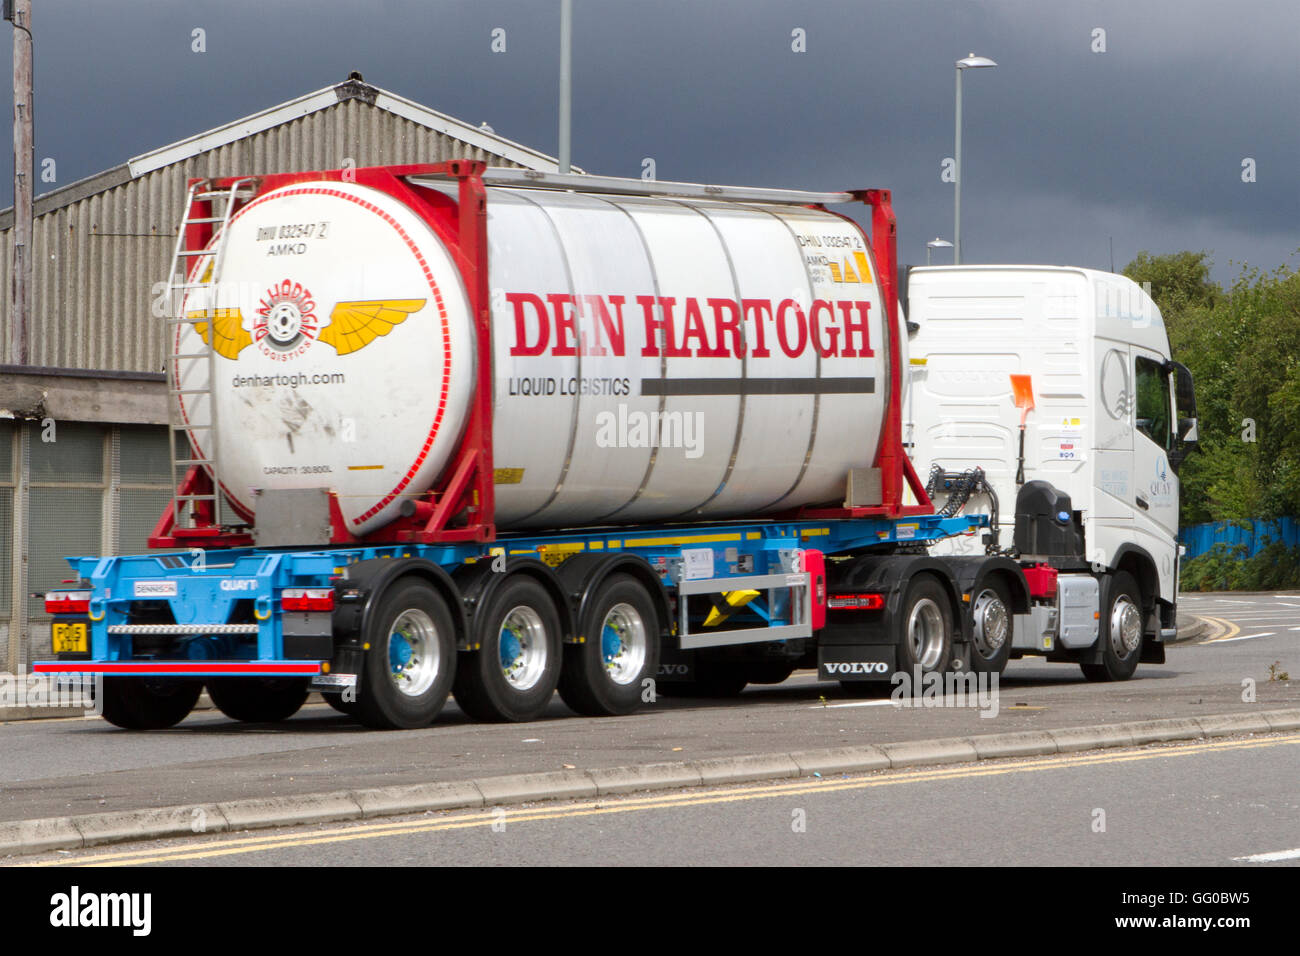 Den Hartogh, Liguid logistics tanker in Liverpool, Merseyside, UK Stock Photo